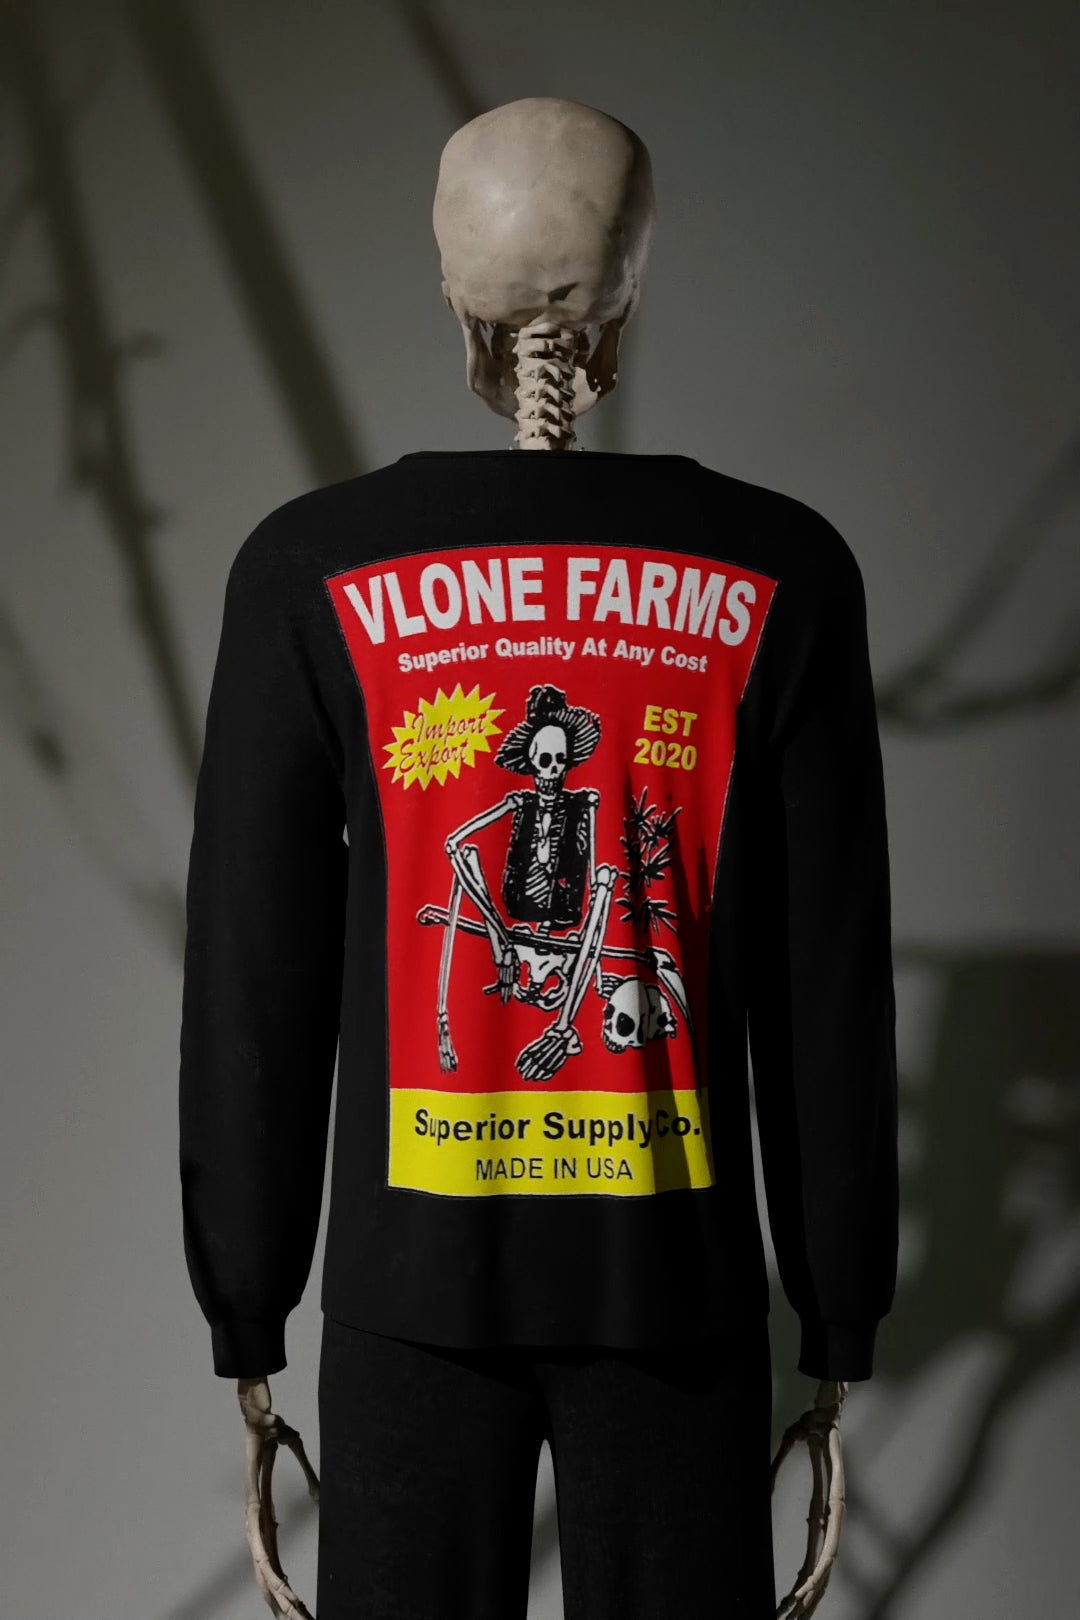 Import/Export VLONE Farms Long Sleeve T-Shirt